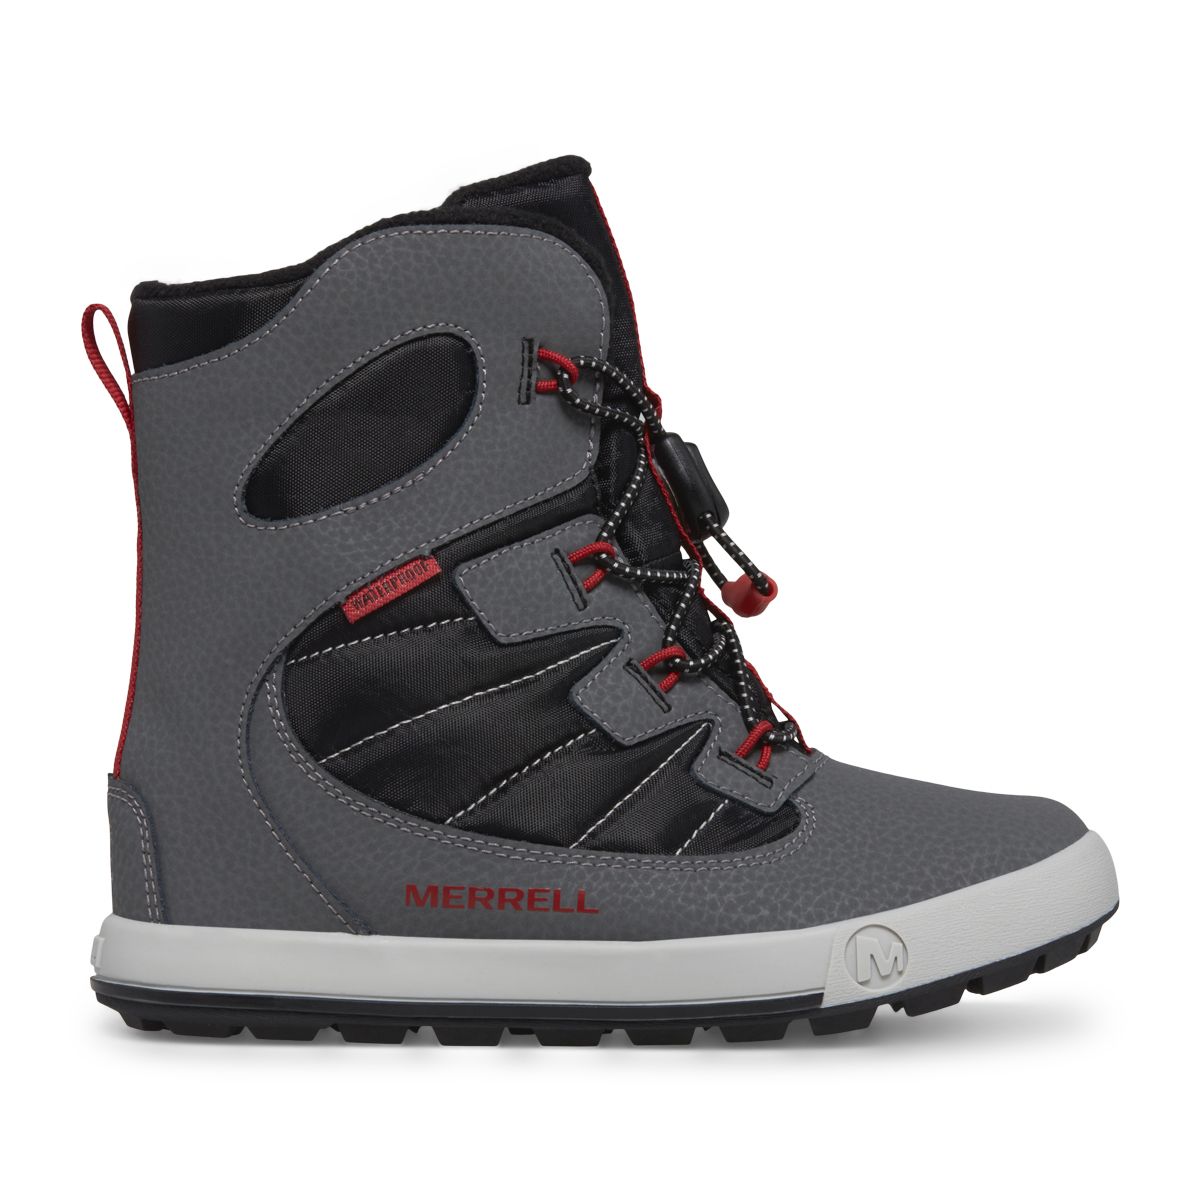 Kids' Snow Boots for Winter | Merrell